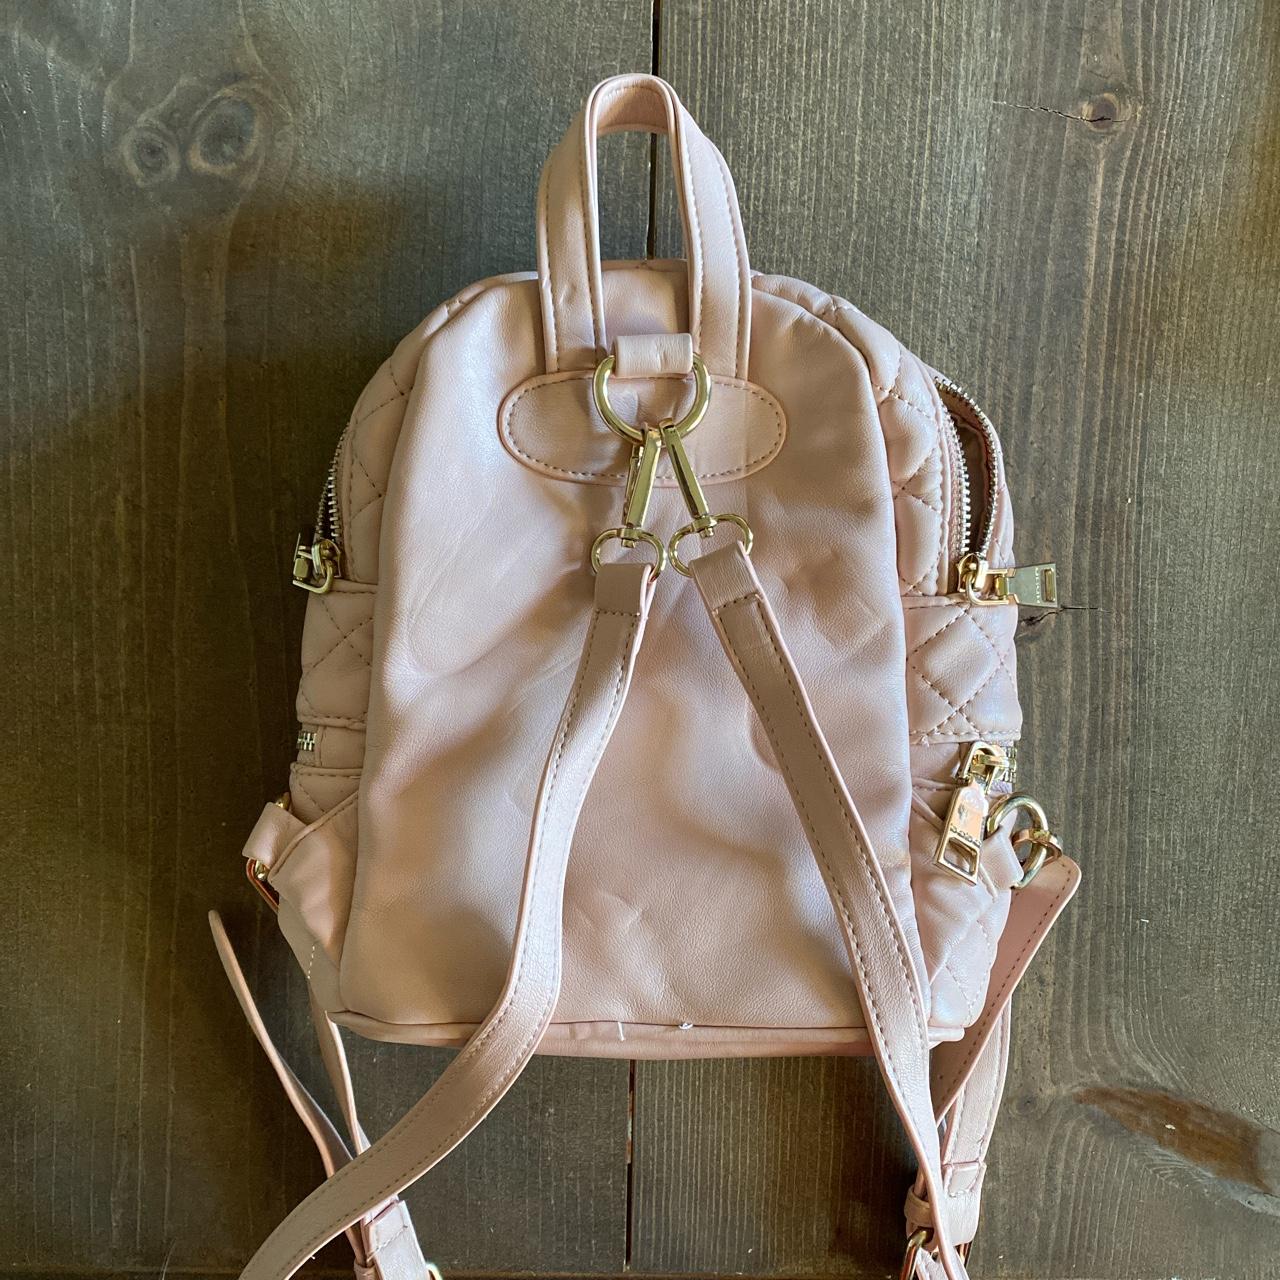 Mini Purse Backpack - Pink 🩷 - Scuff Marks - - Depop